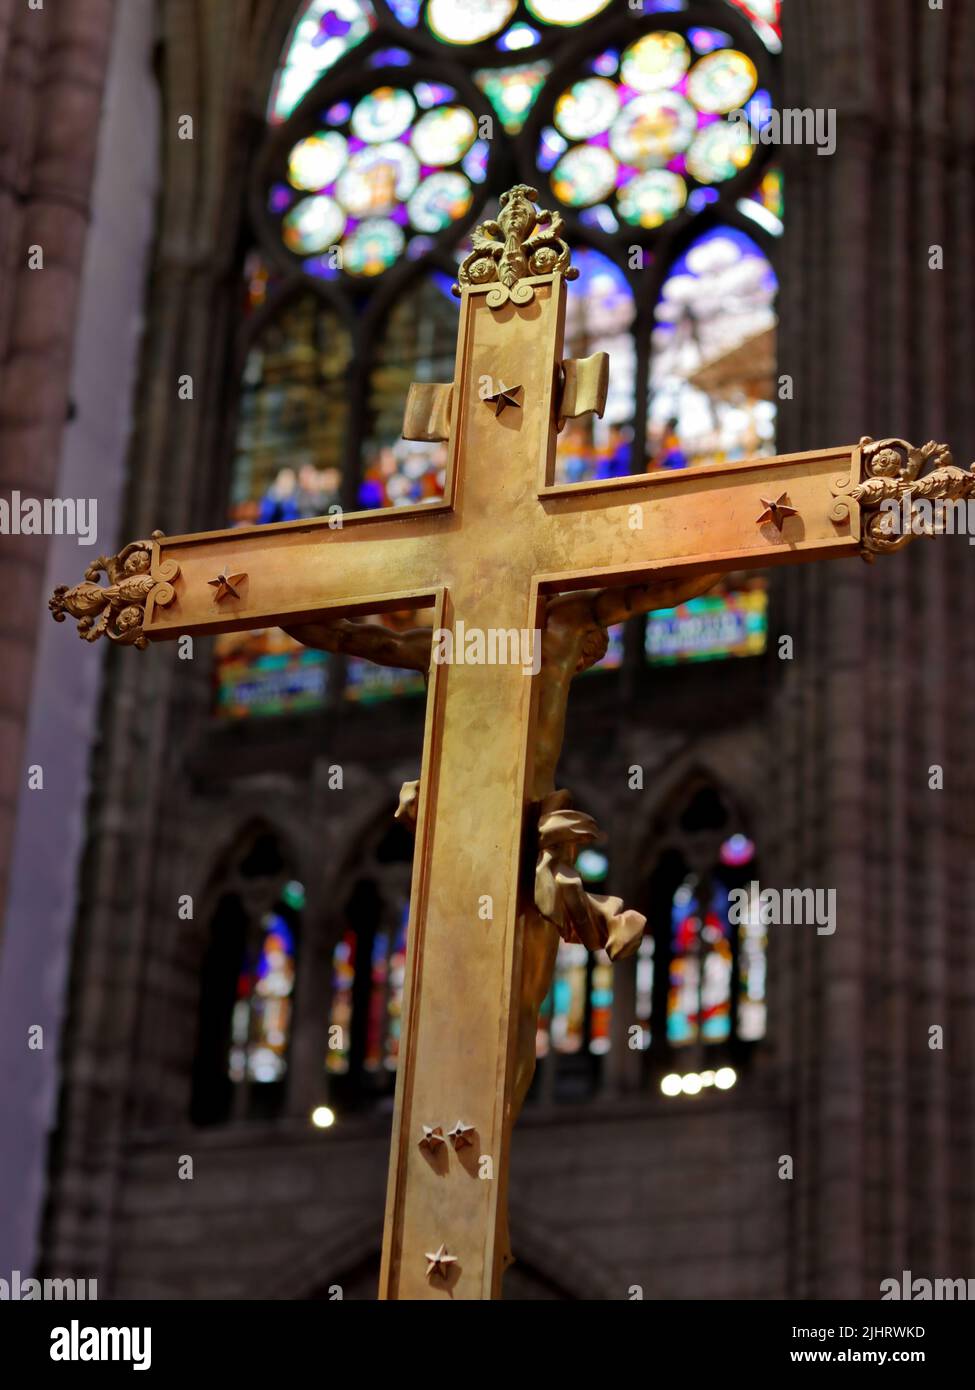 Saint-Denis, France - June 15, 2019: Catholic cross at the Basilica of Saint-Denis Stock Photo